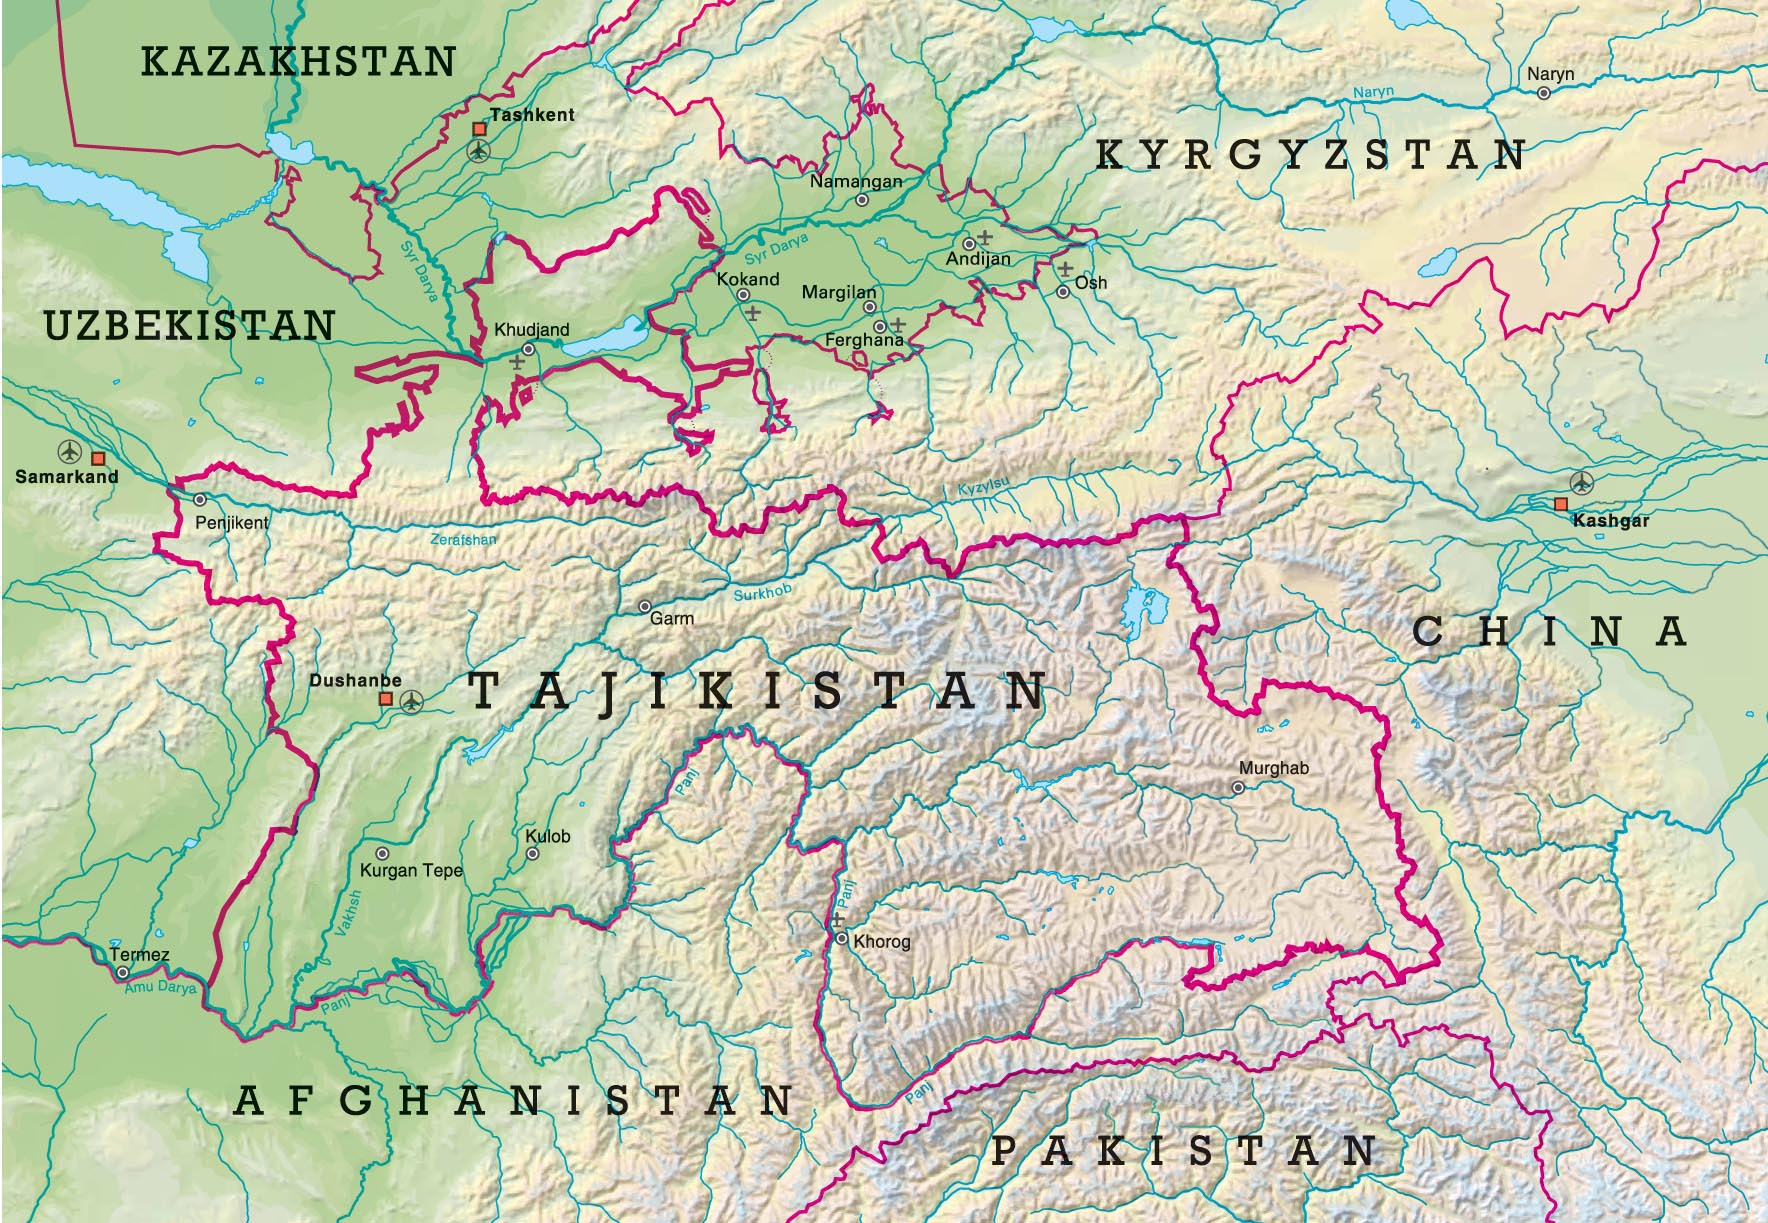 Image:Tajikistan OVER